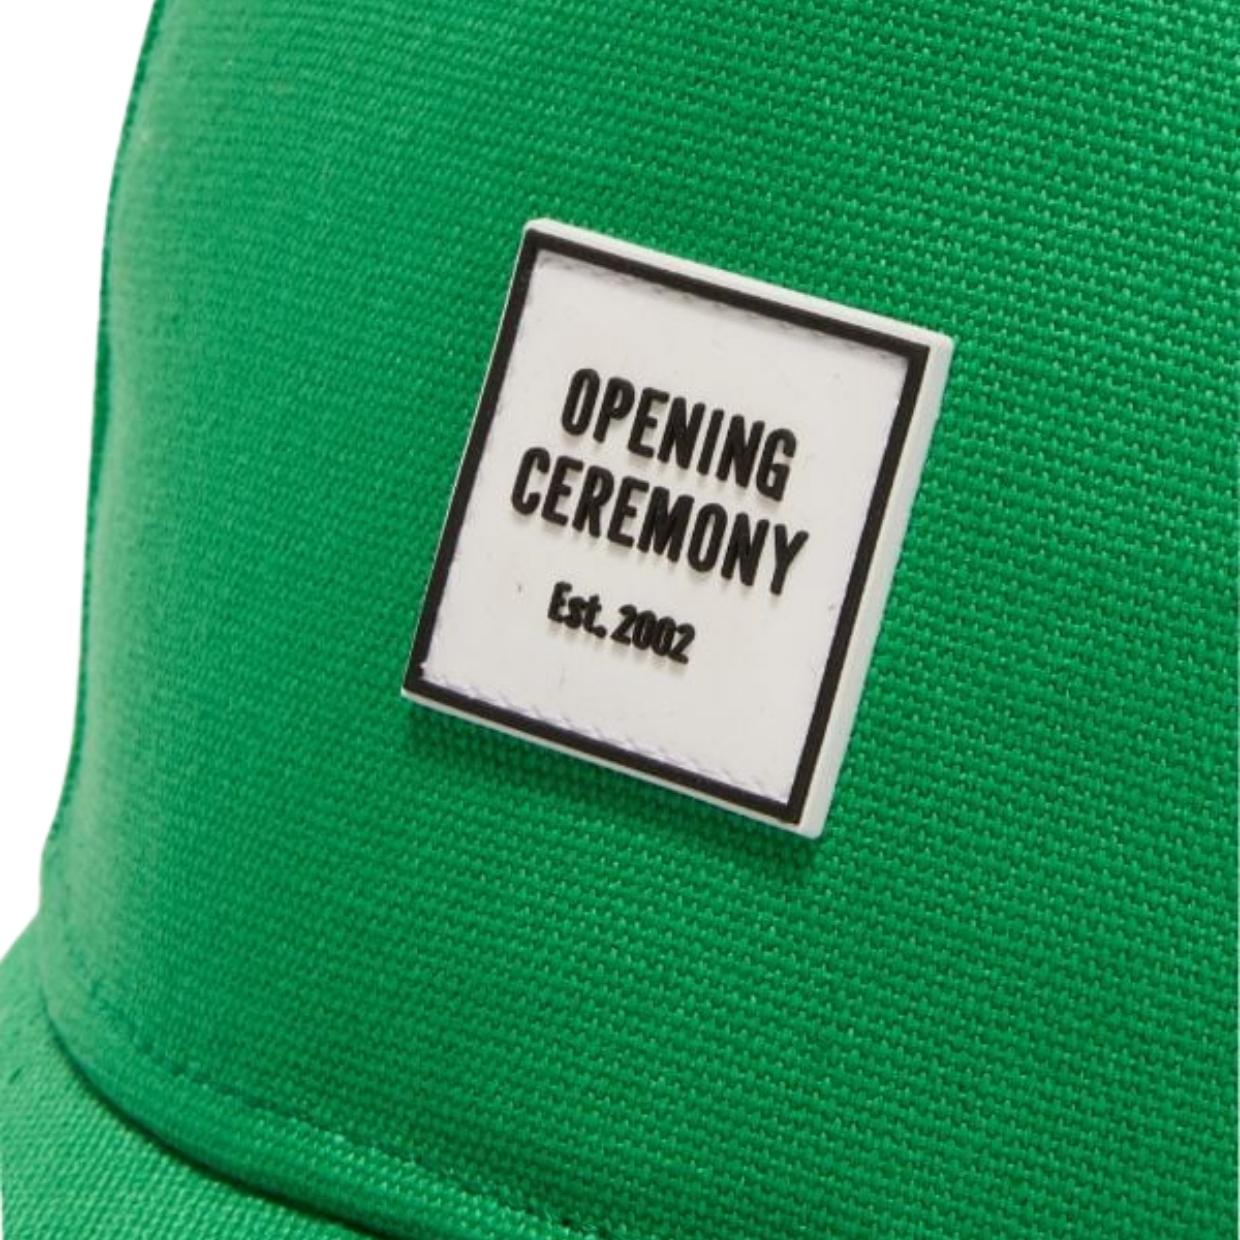 Opening Ceremony Box Logo Green Cap